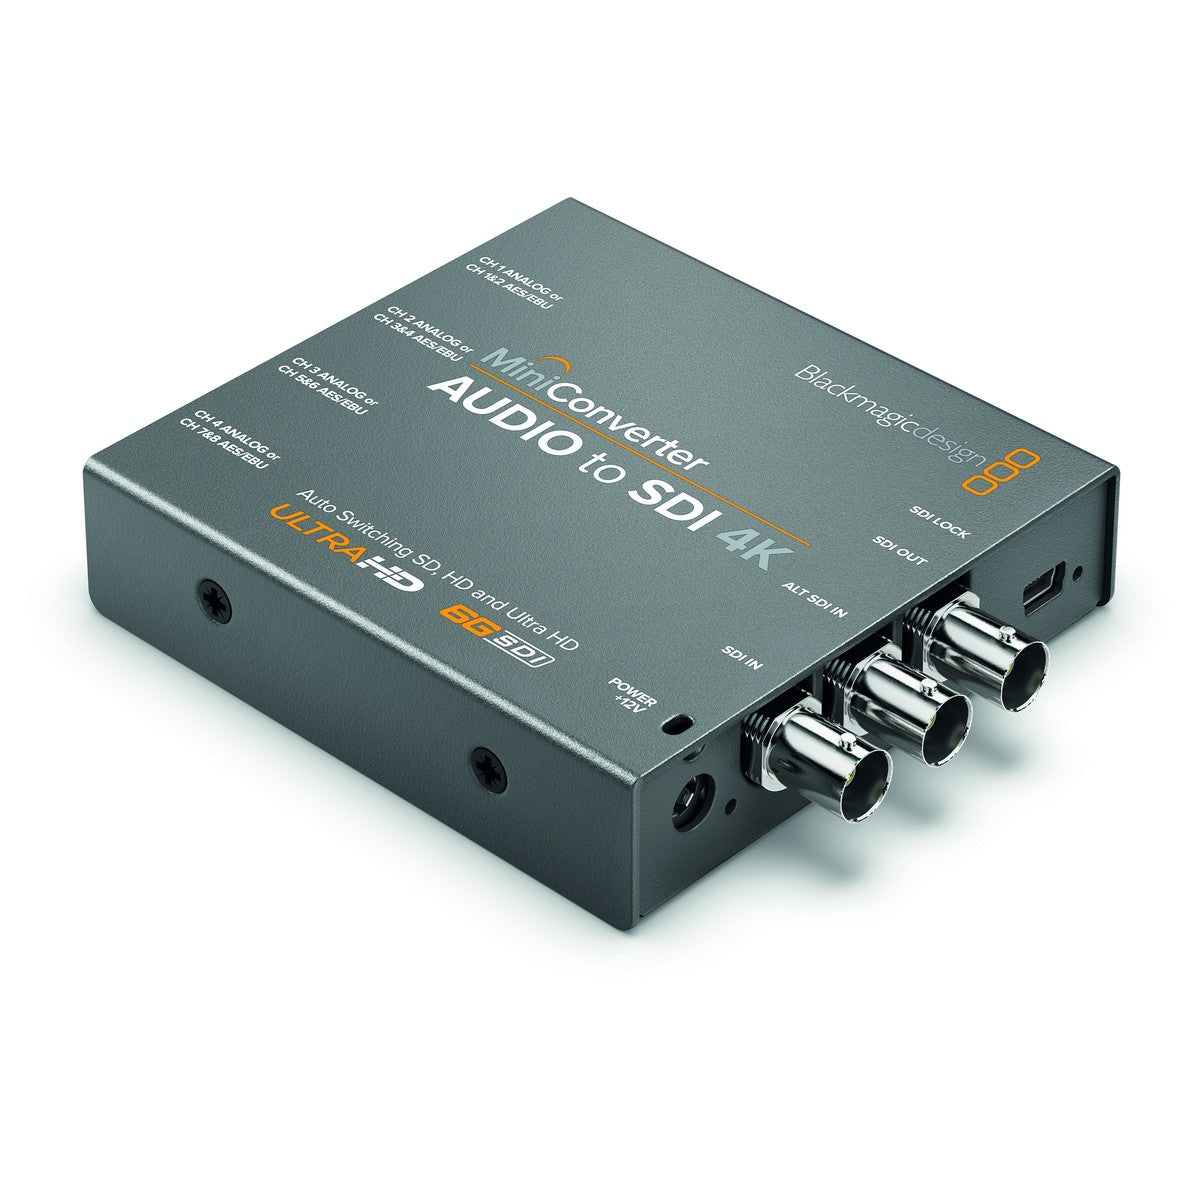 Blackmagic Mini Converter | Audio to SDI 4K